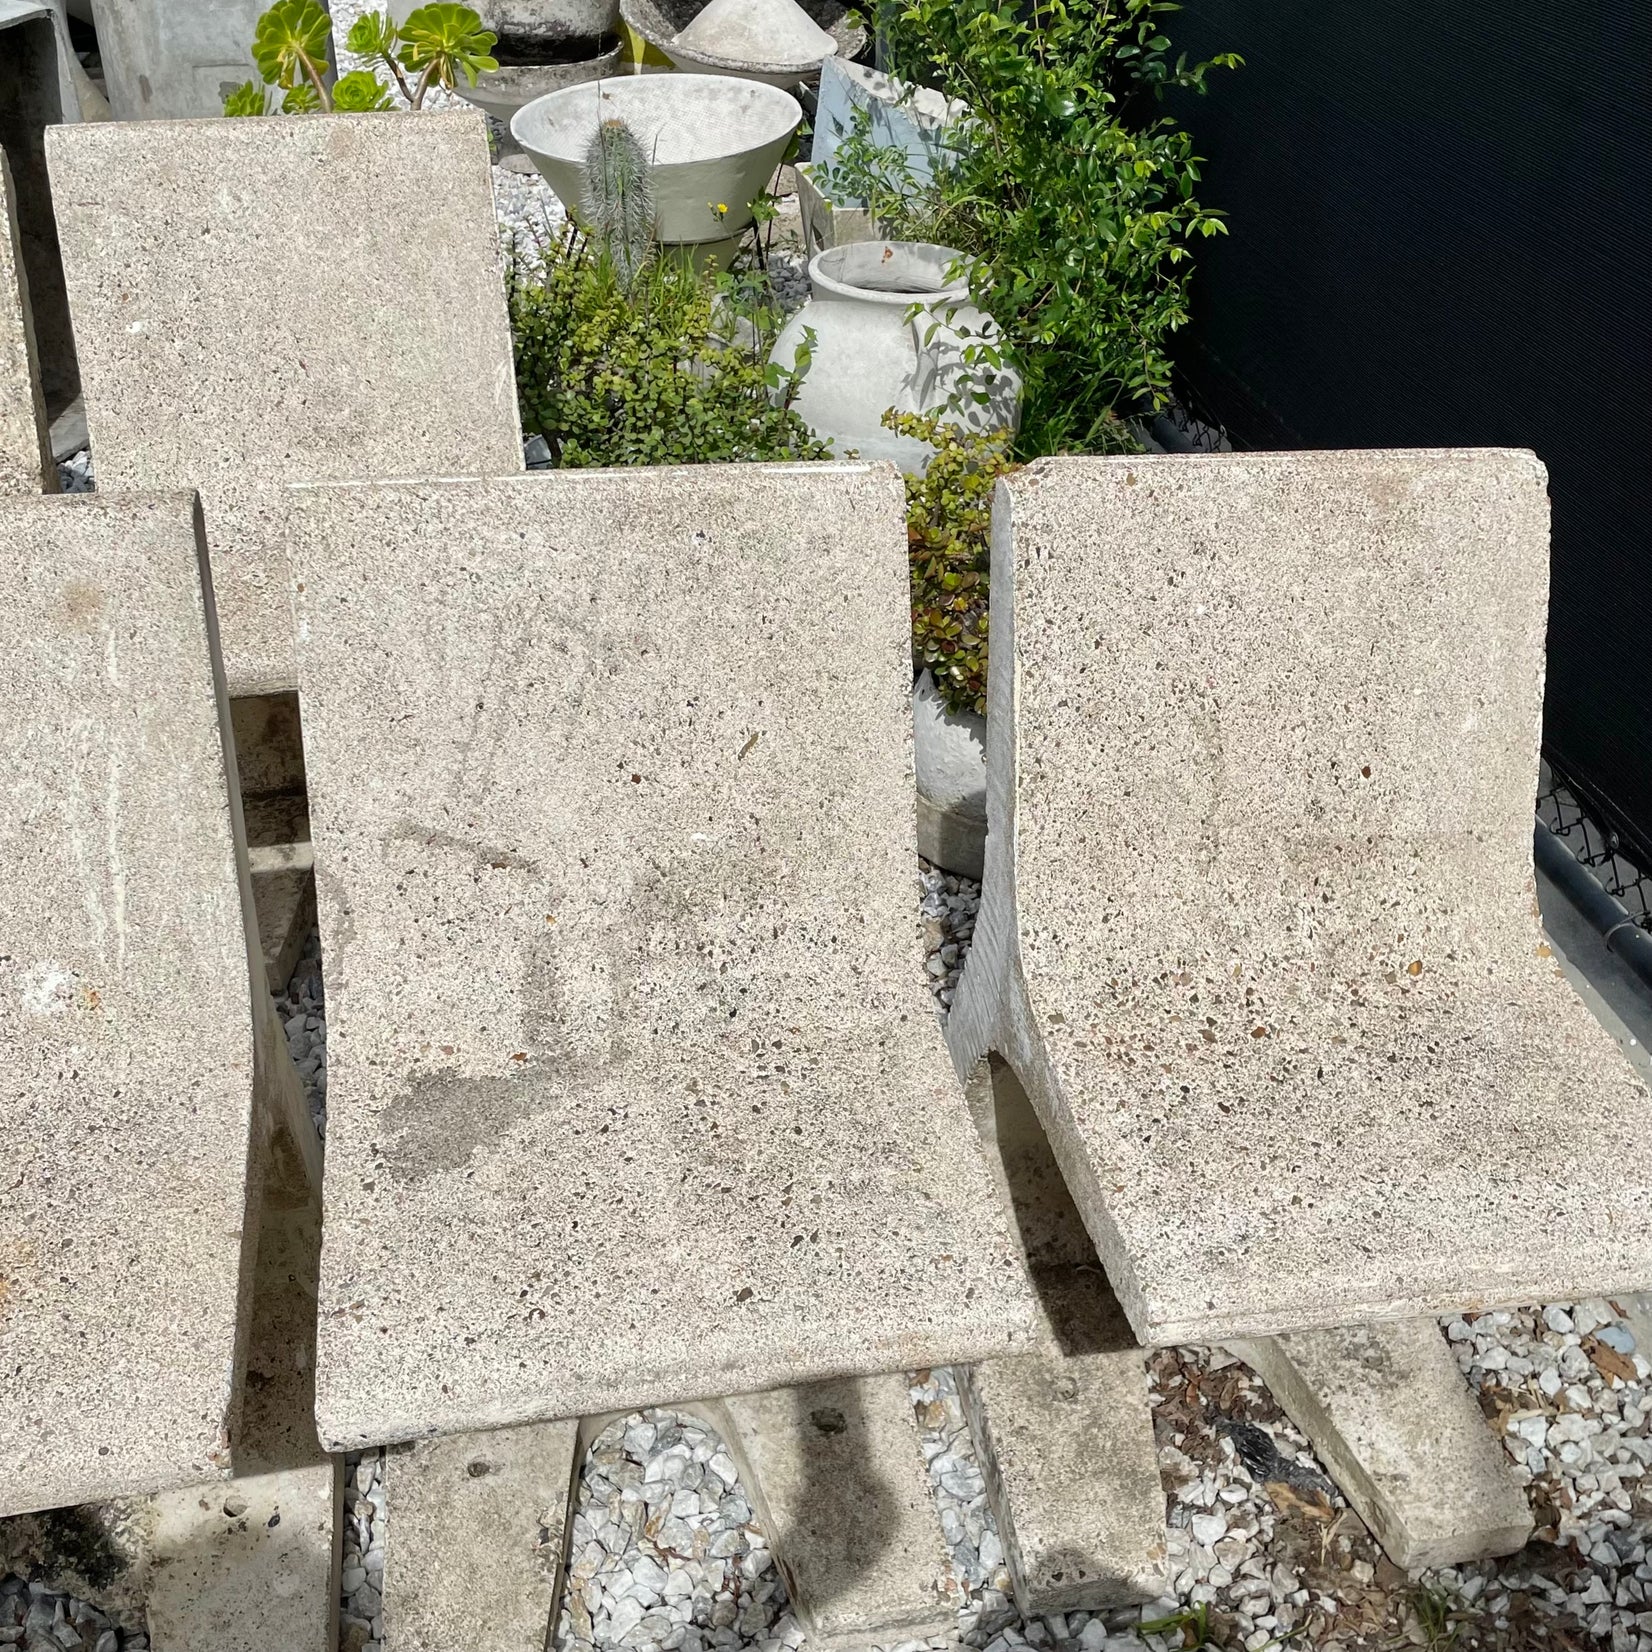 Monumental Concrete Sculptural Chairs, 1970s France